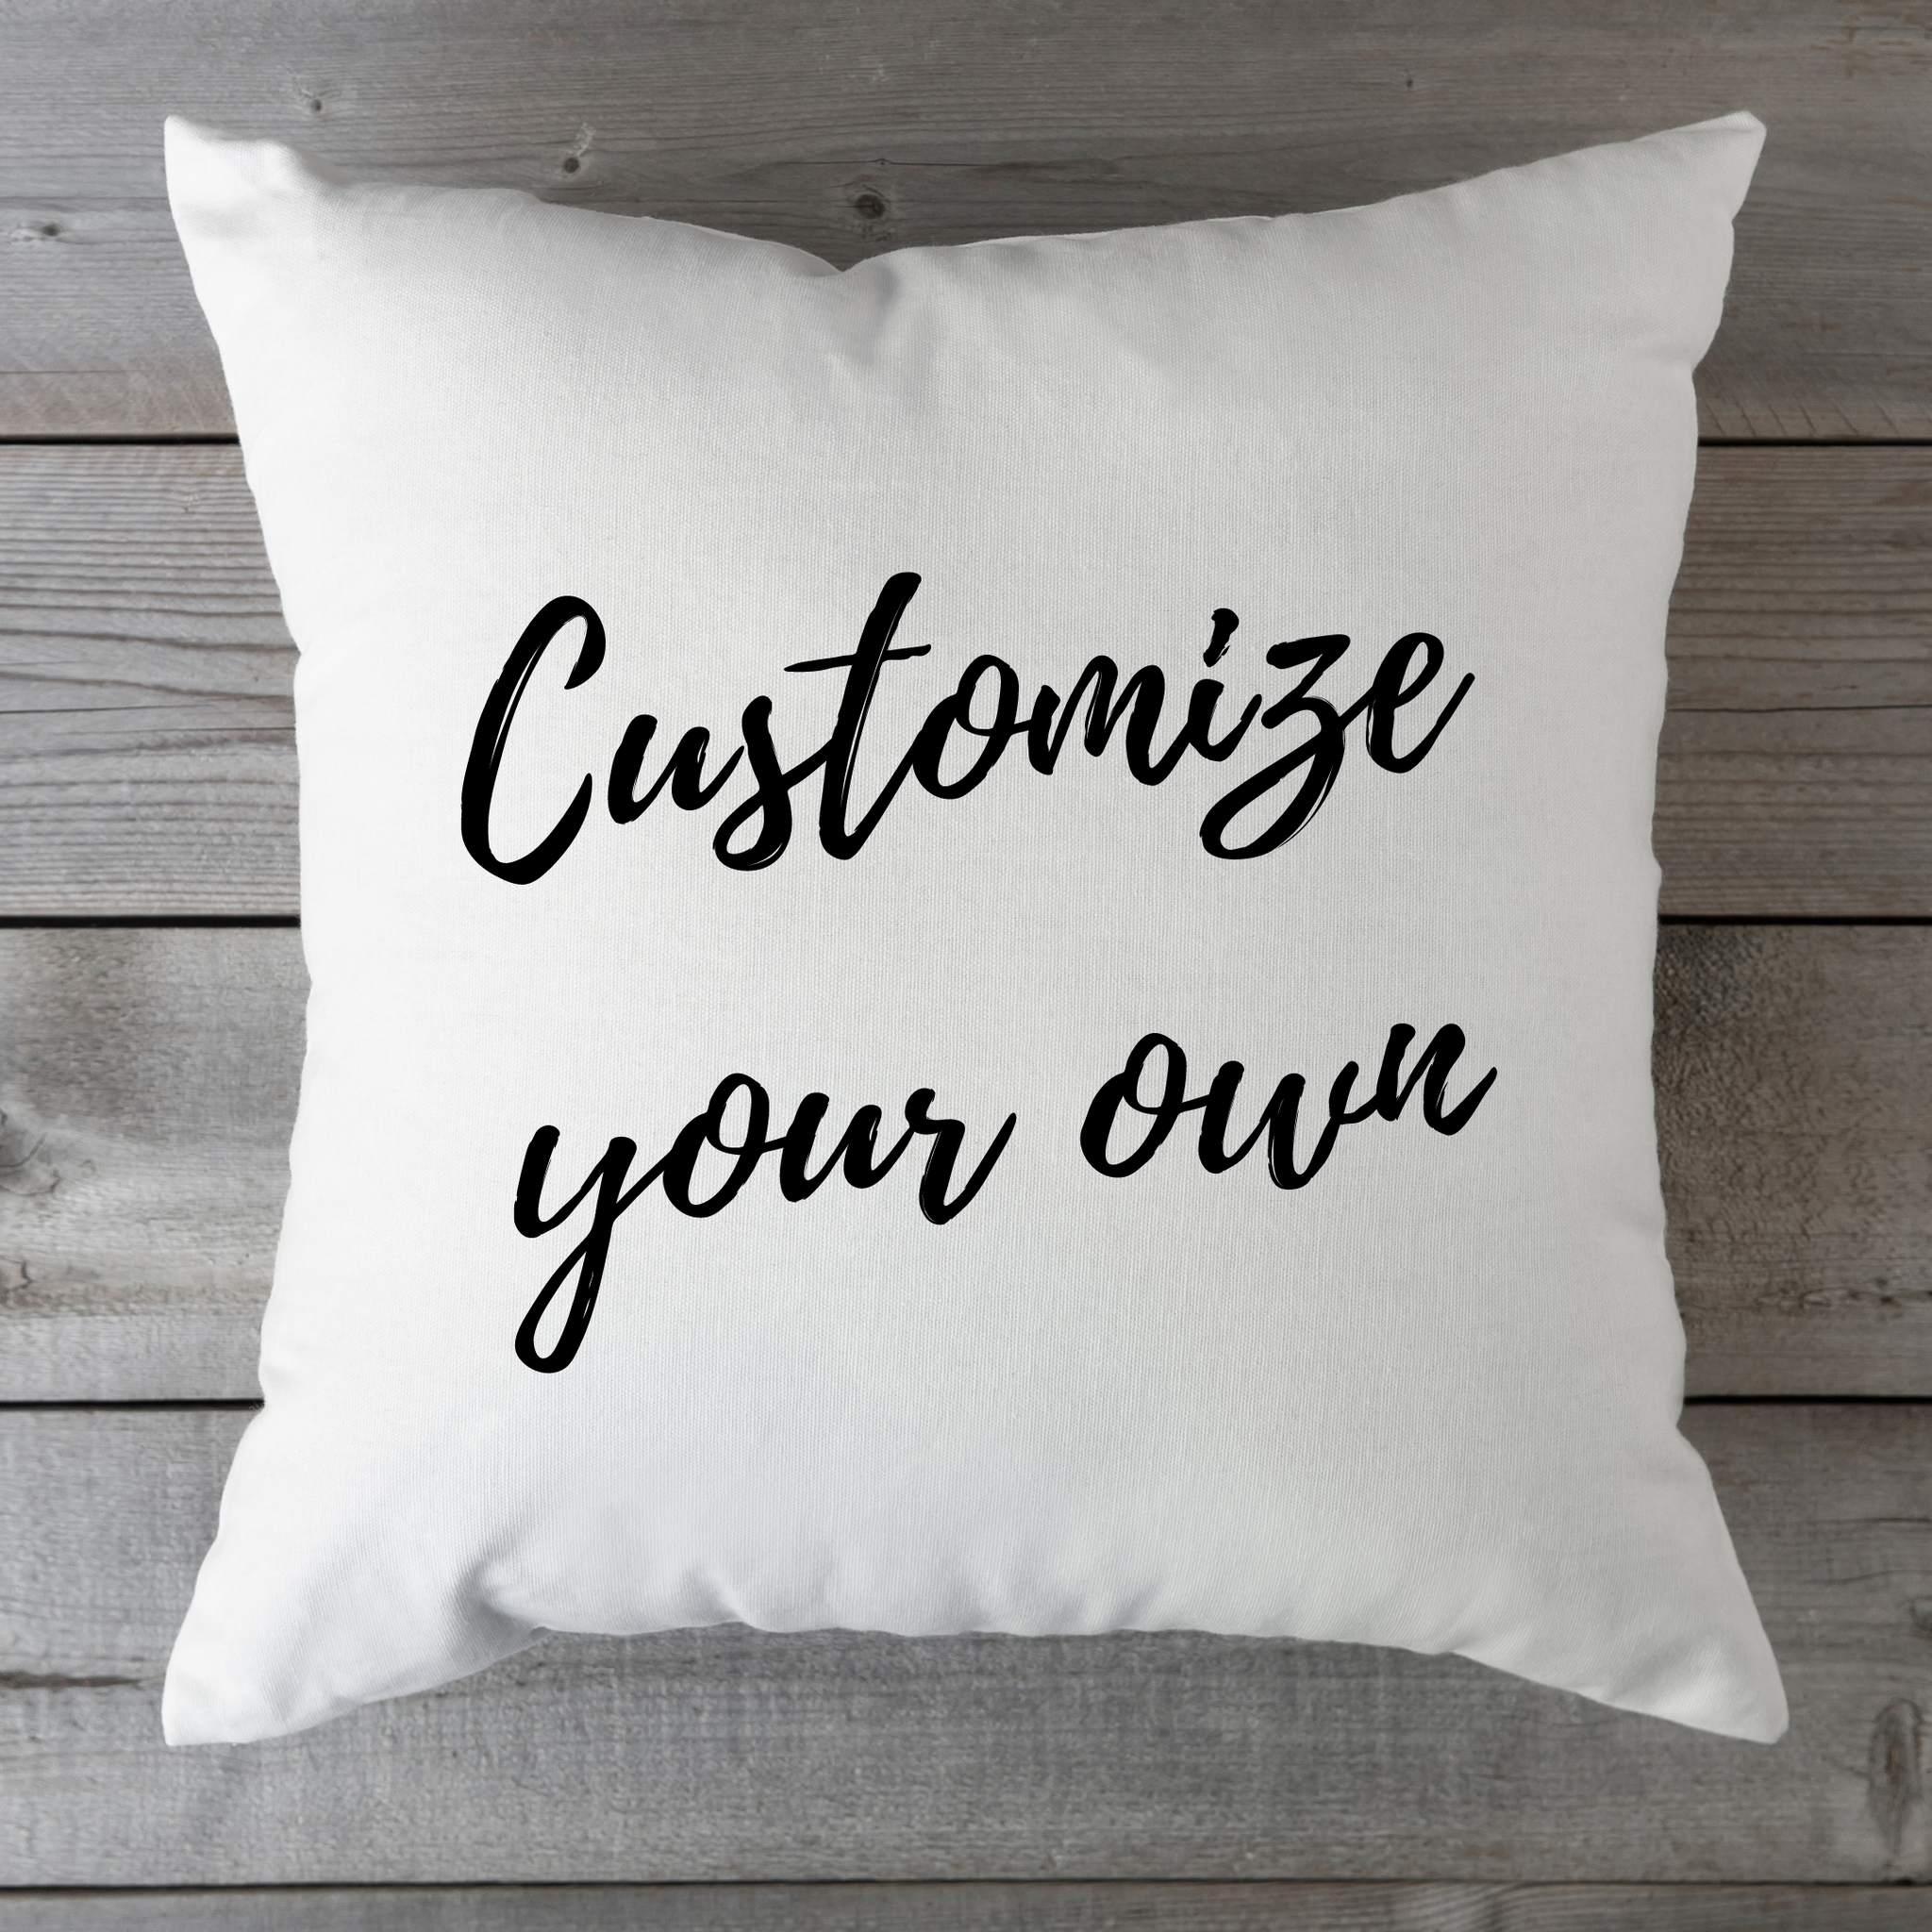 Customize Your Own Throw Pillow